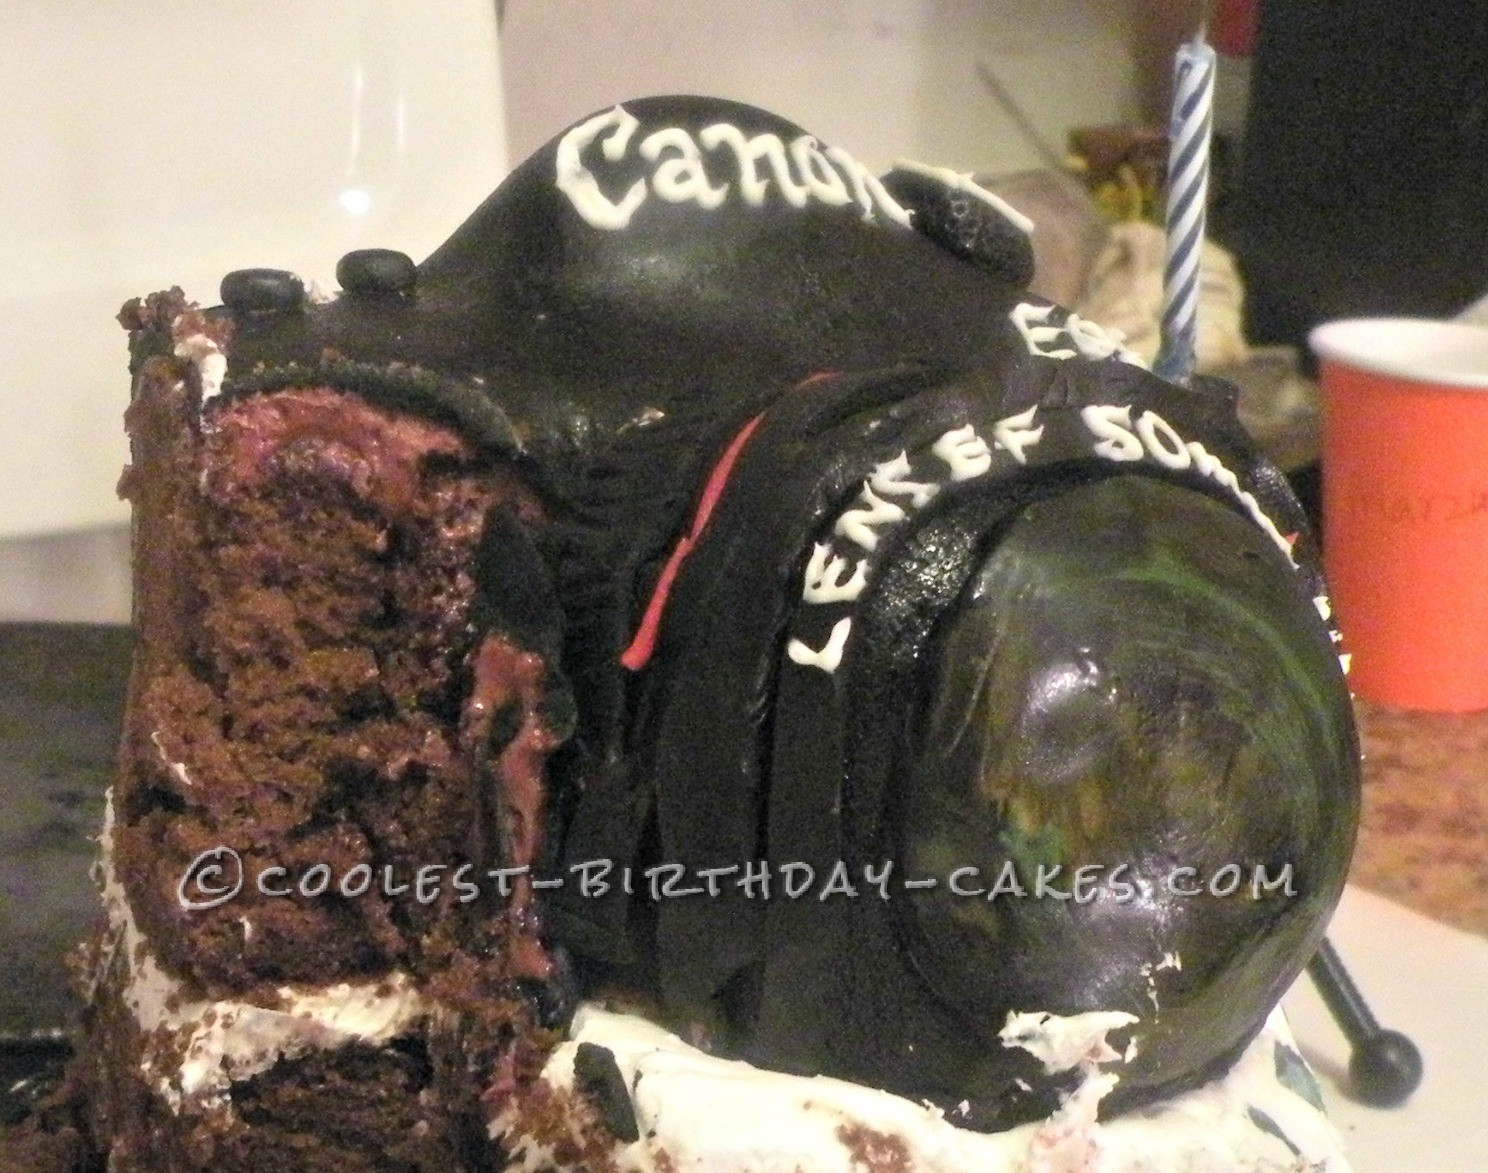 Coolest Canon EOS 5D Mark 111 Camera Cake